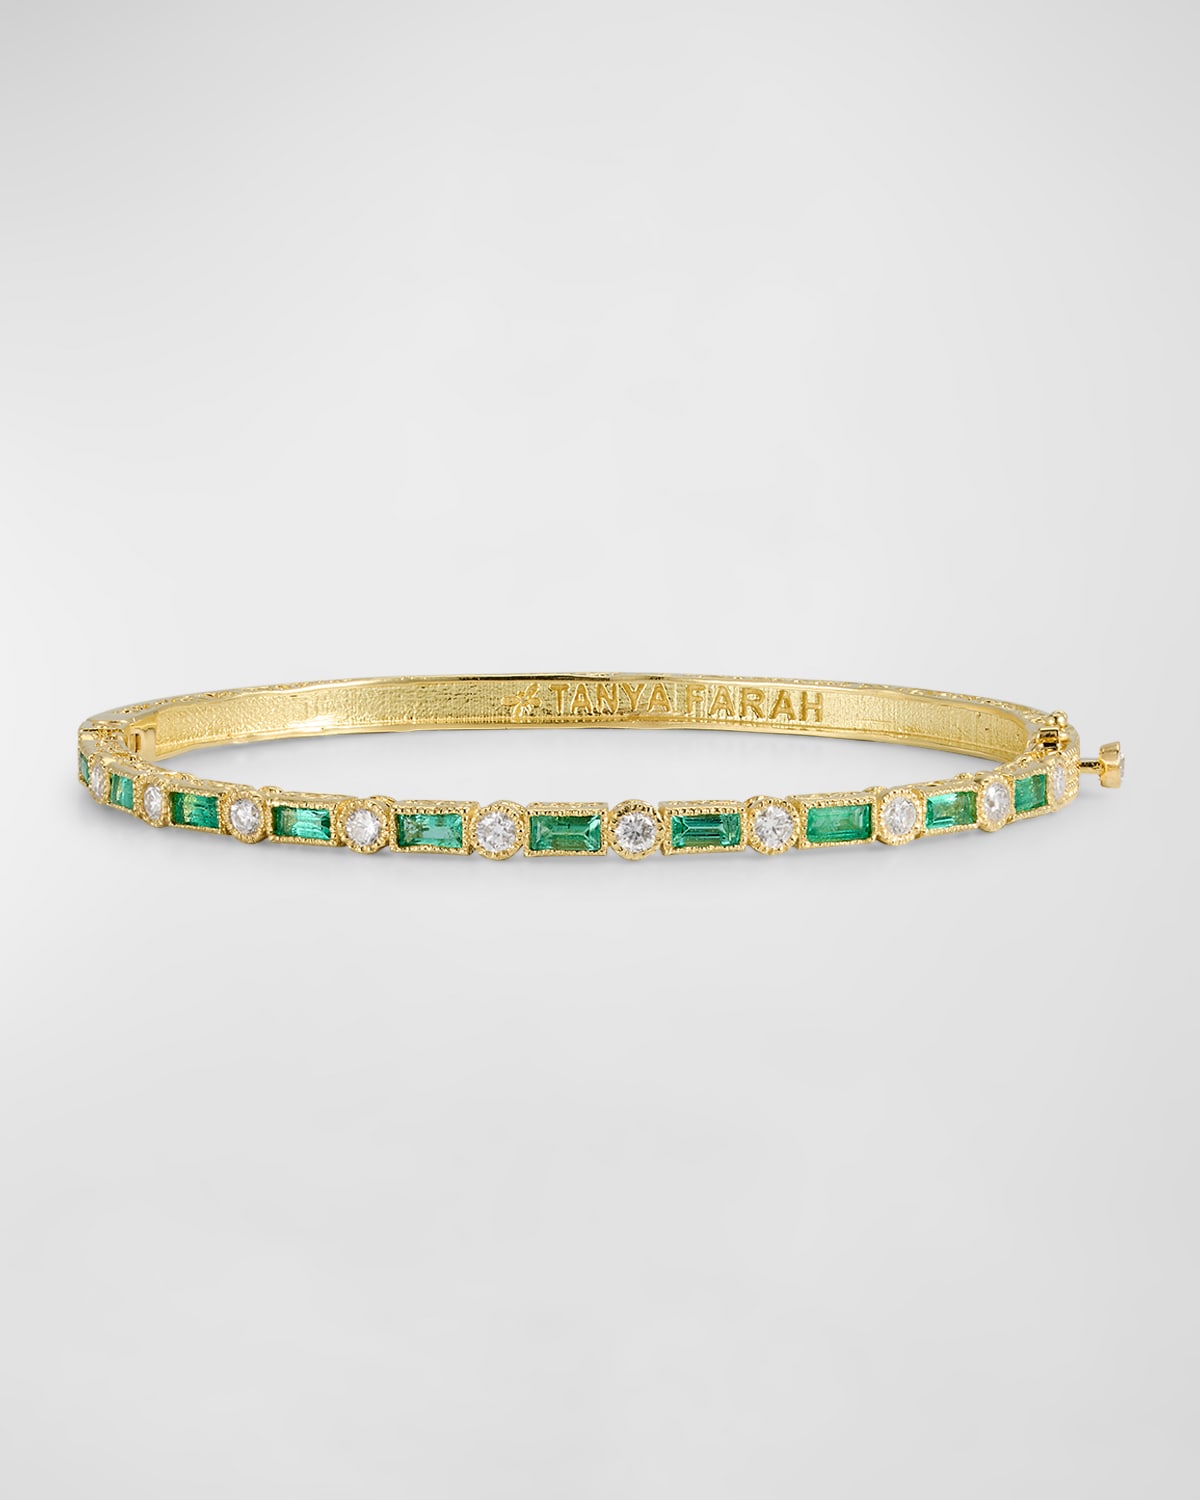 Tanya Farah 18k Yellow Gold Emerald And Diamond Bangle Bracelet